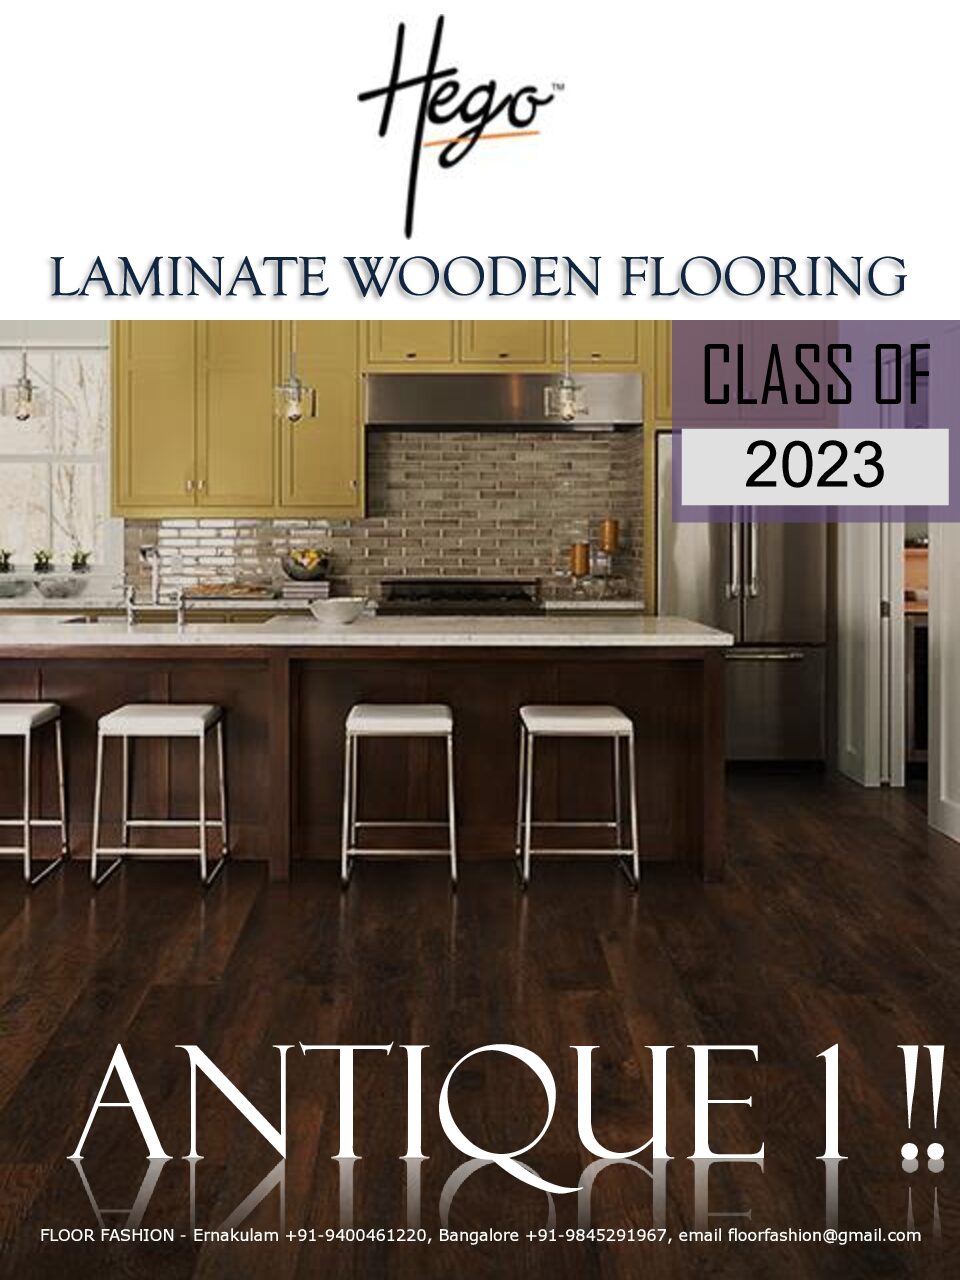 Hego FF Laminate flooring